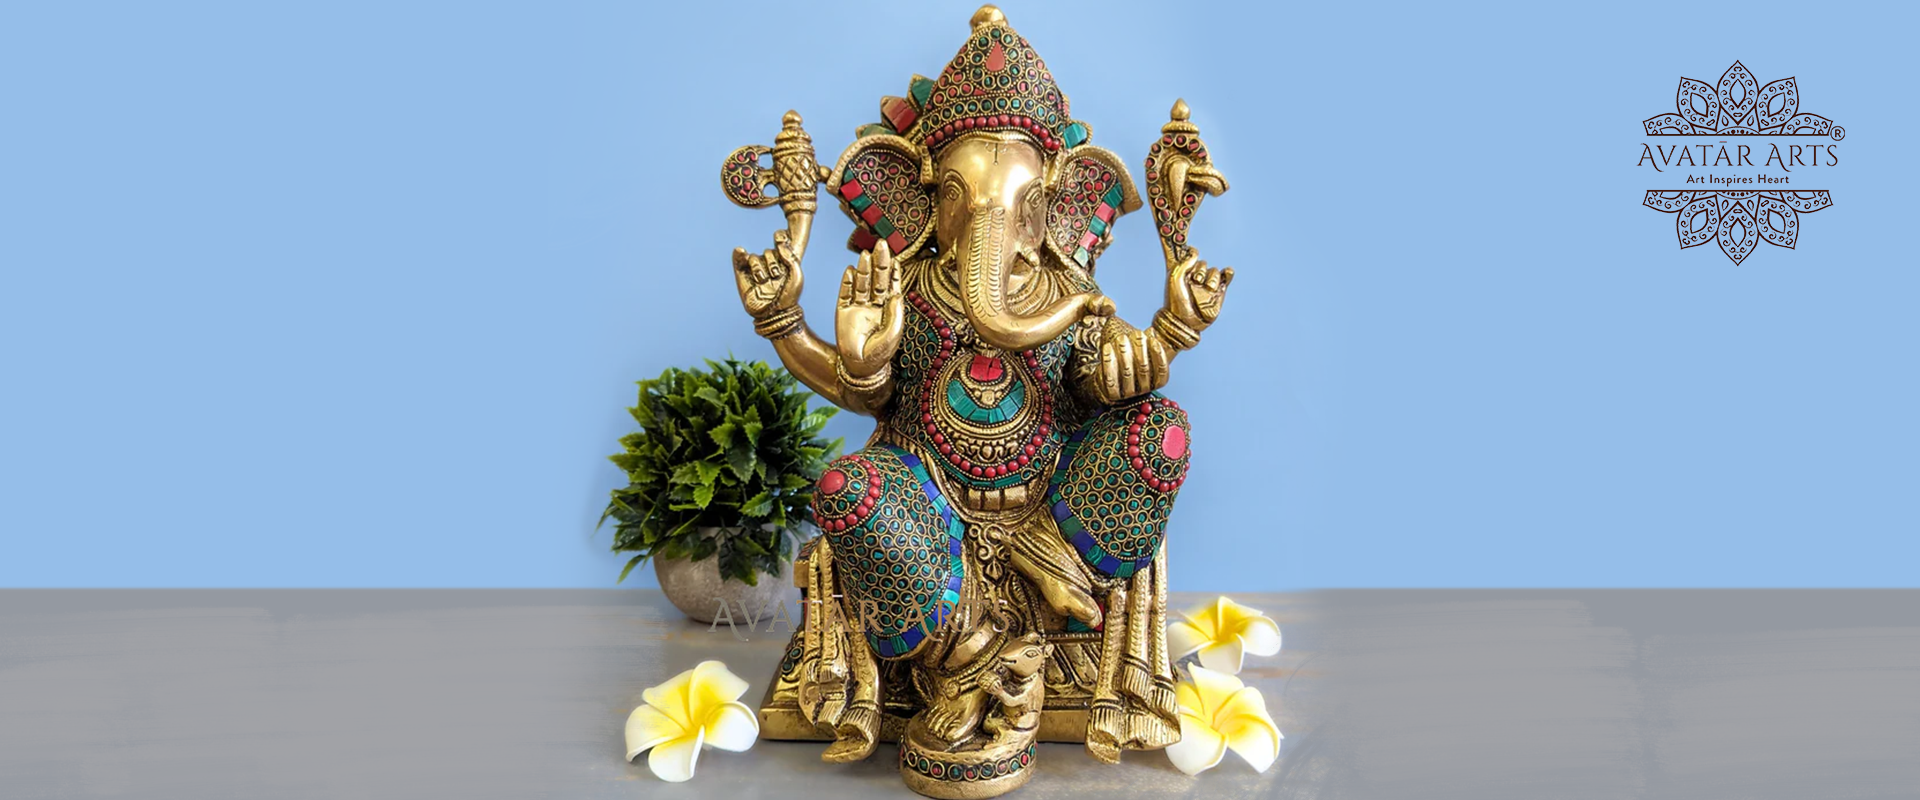 Why We Love to Keep Ganesha Idol at Home - Avatar Arts